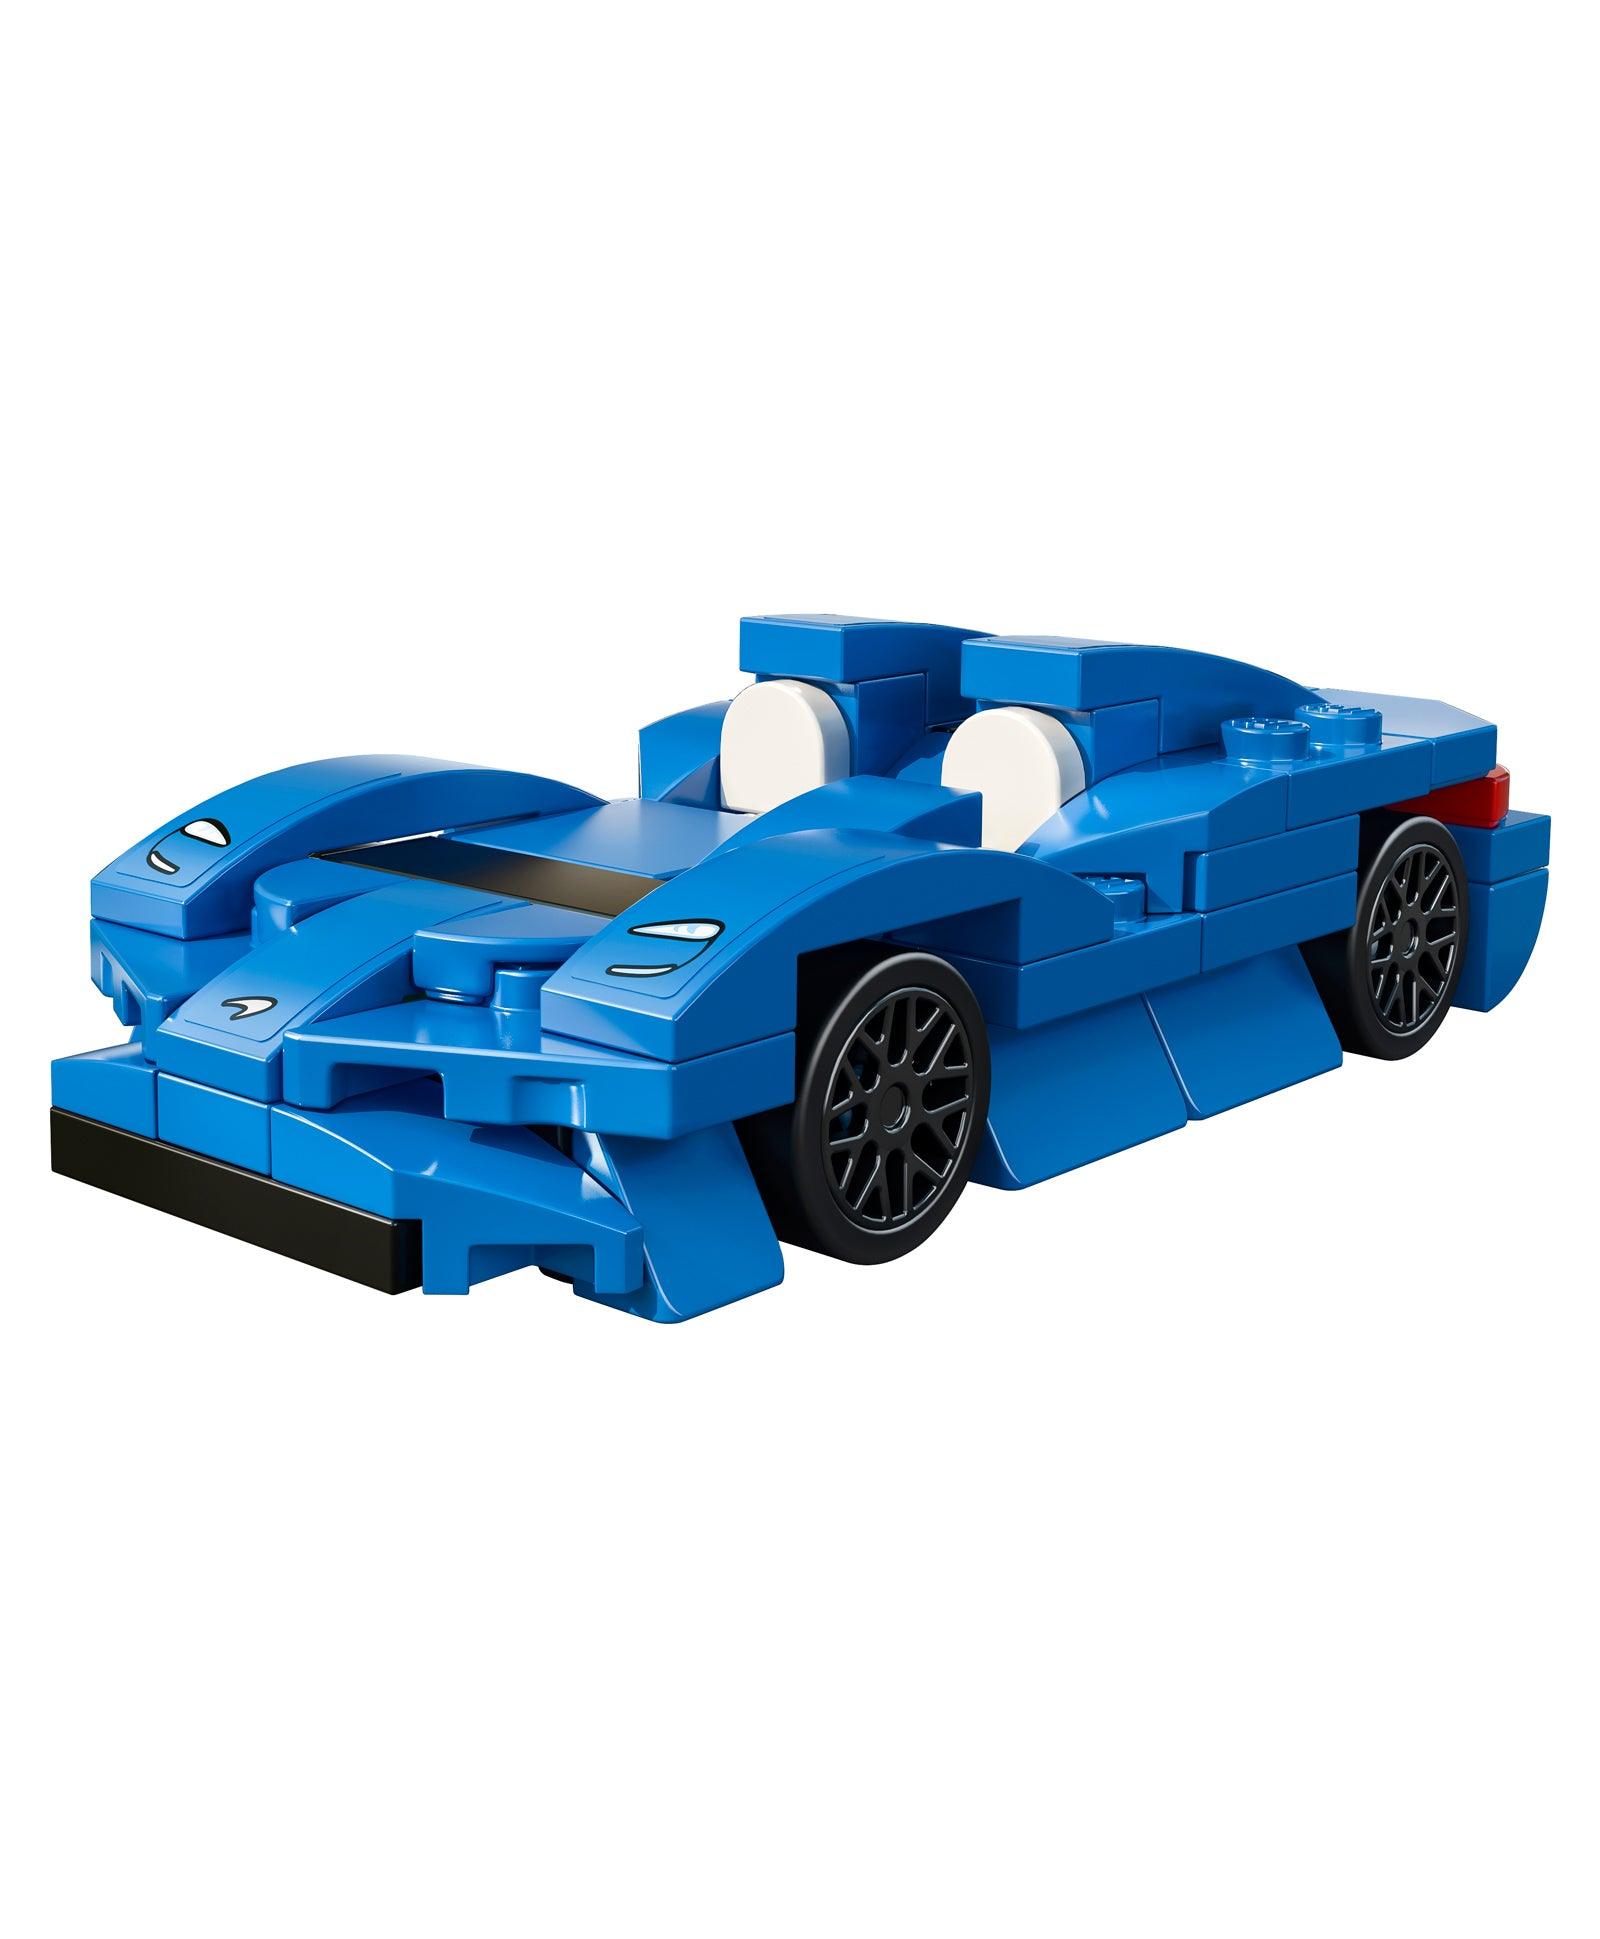 LEGO Speed Champions McLaren Elva Building Kit for Ages 6+ - FunCorp India